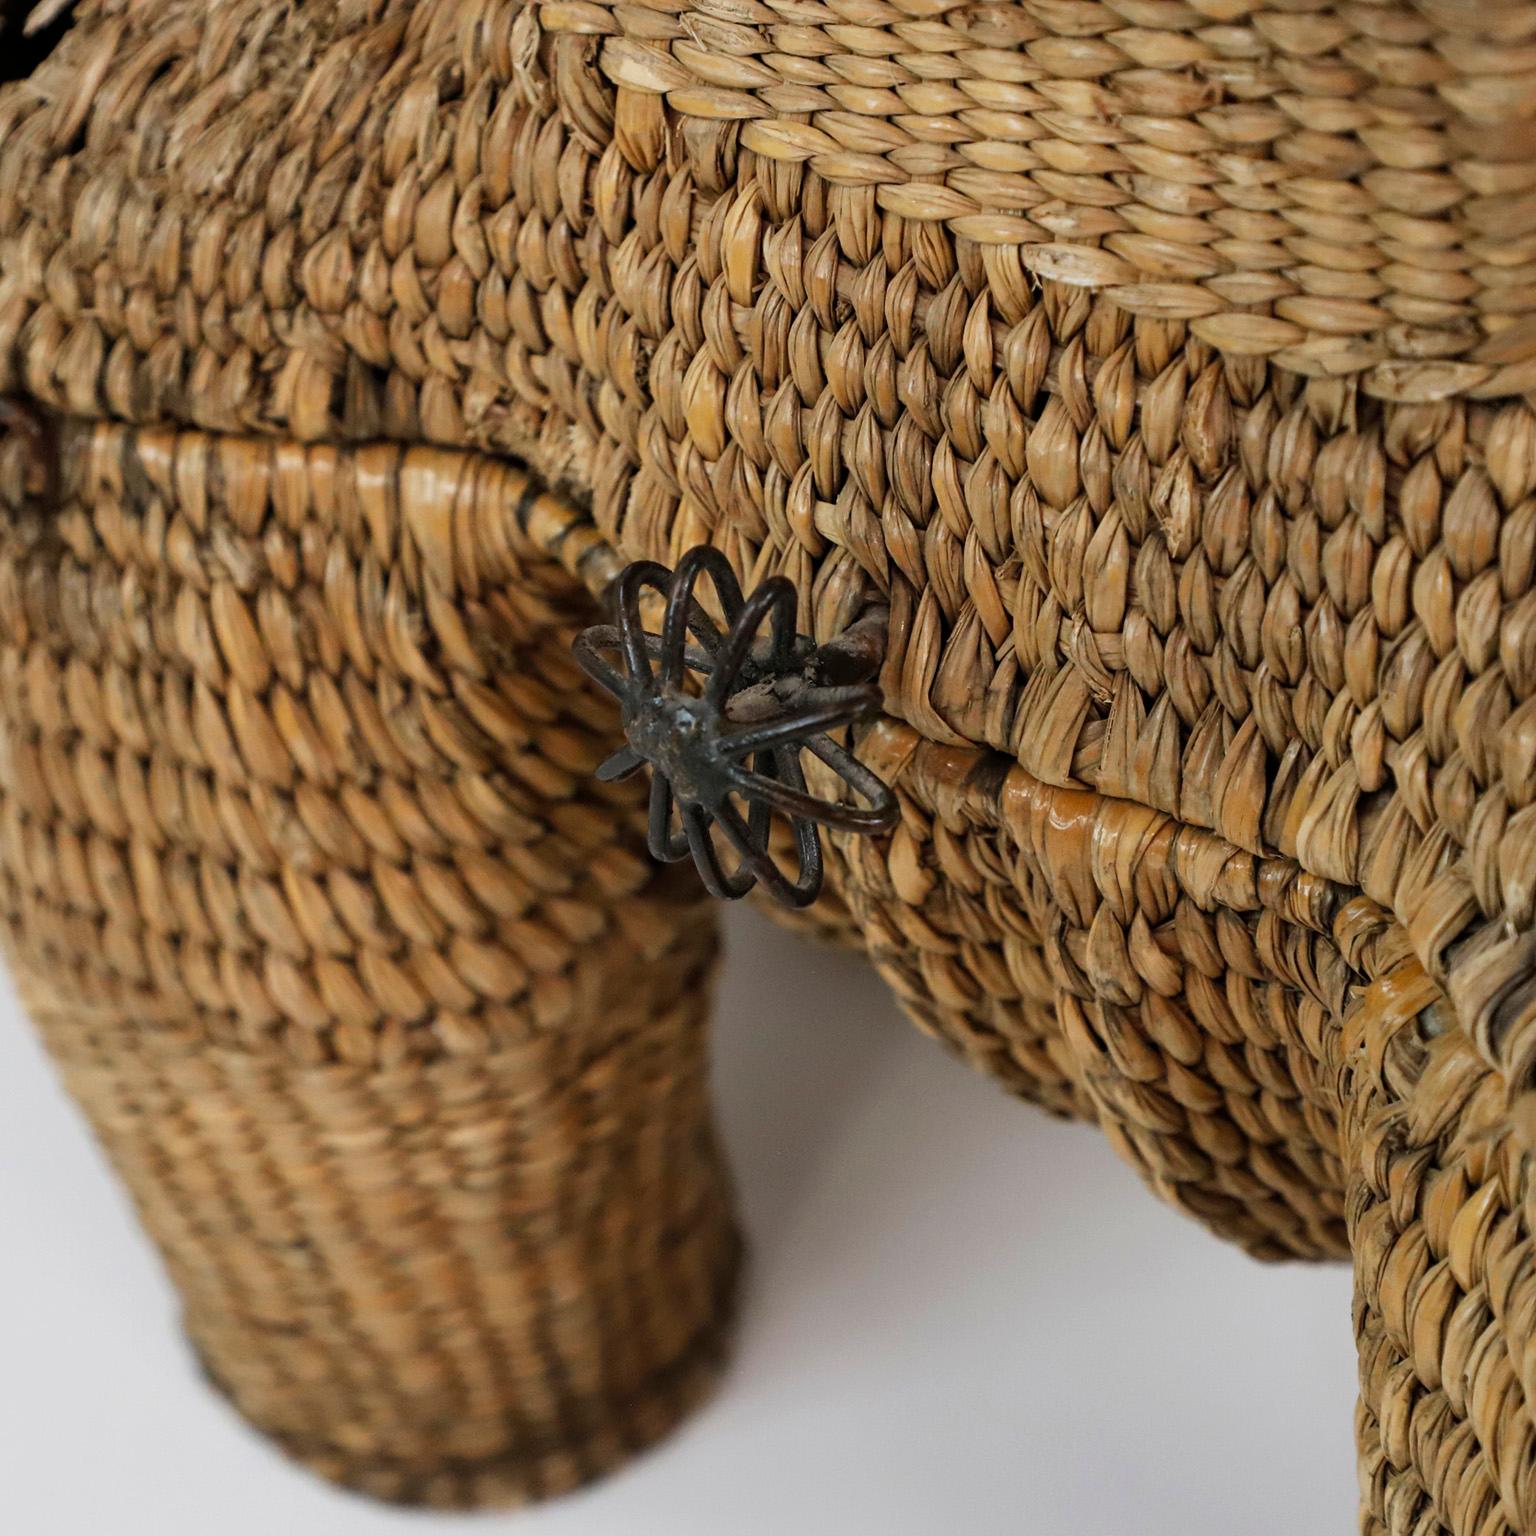 Circa 1970, we offer this Antique Original Mario Lopez Torres Elephant Box, made in natural woven and iron structure, includes original mark Mario Lopez Torres 1974 Hecho en Mexico.